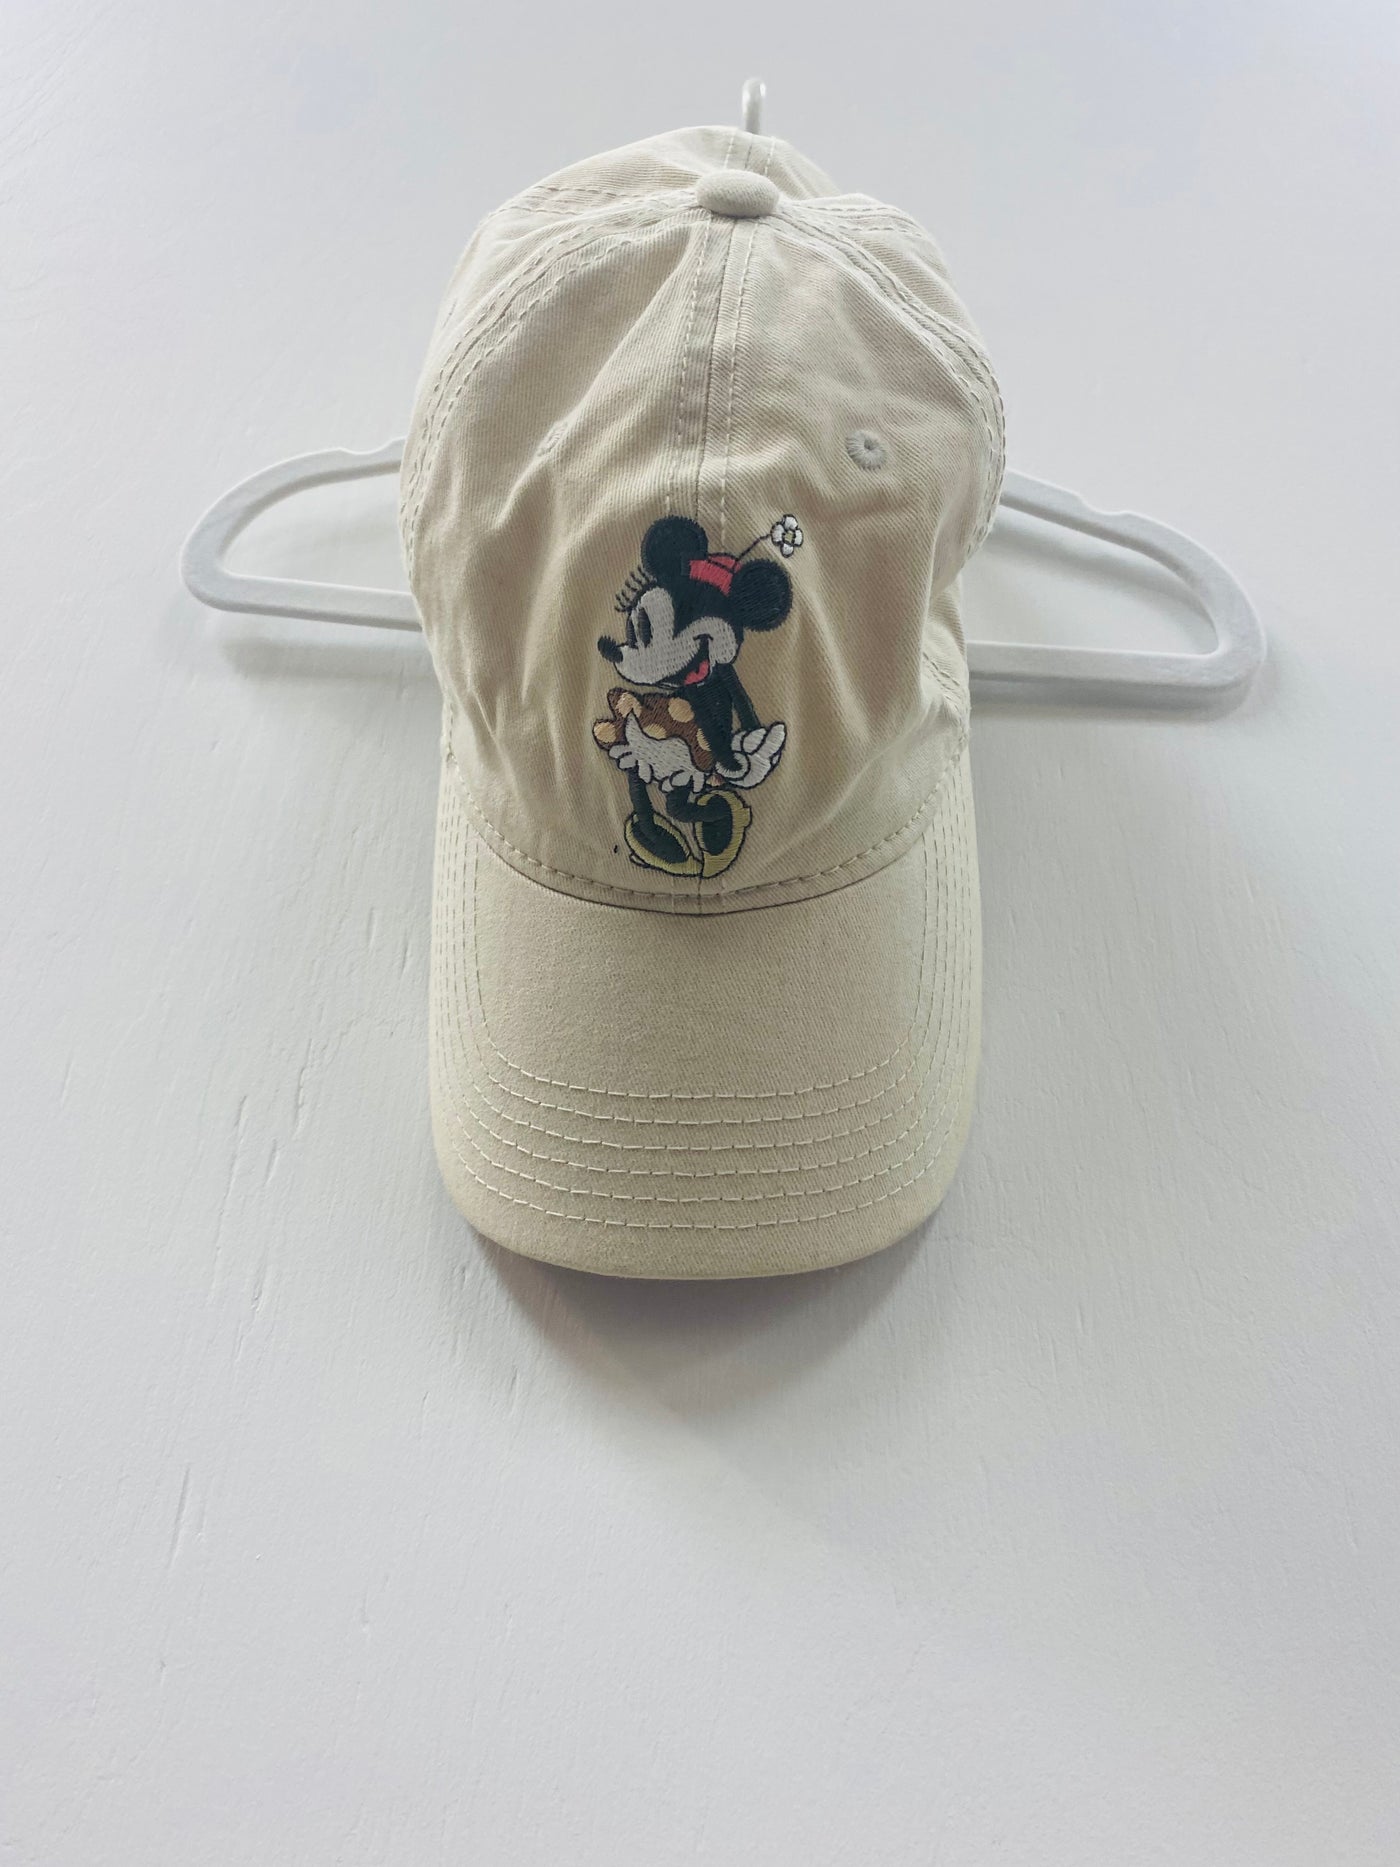 Minnie Mouse kids ball cap